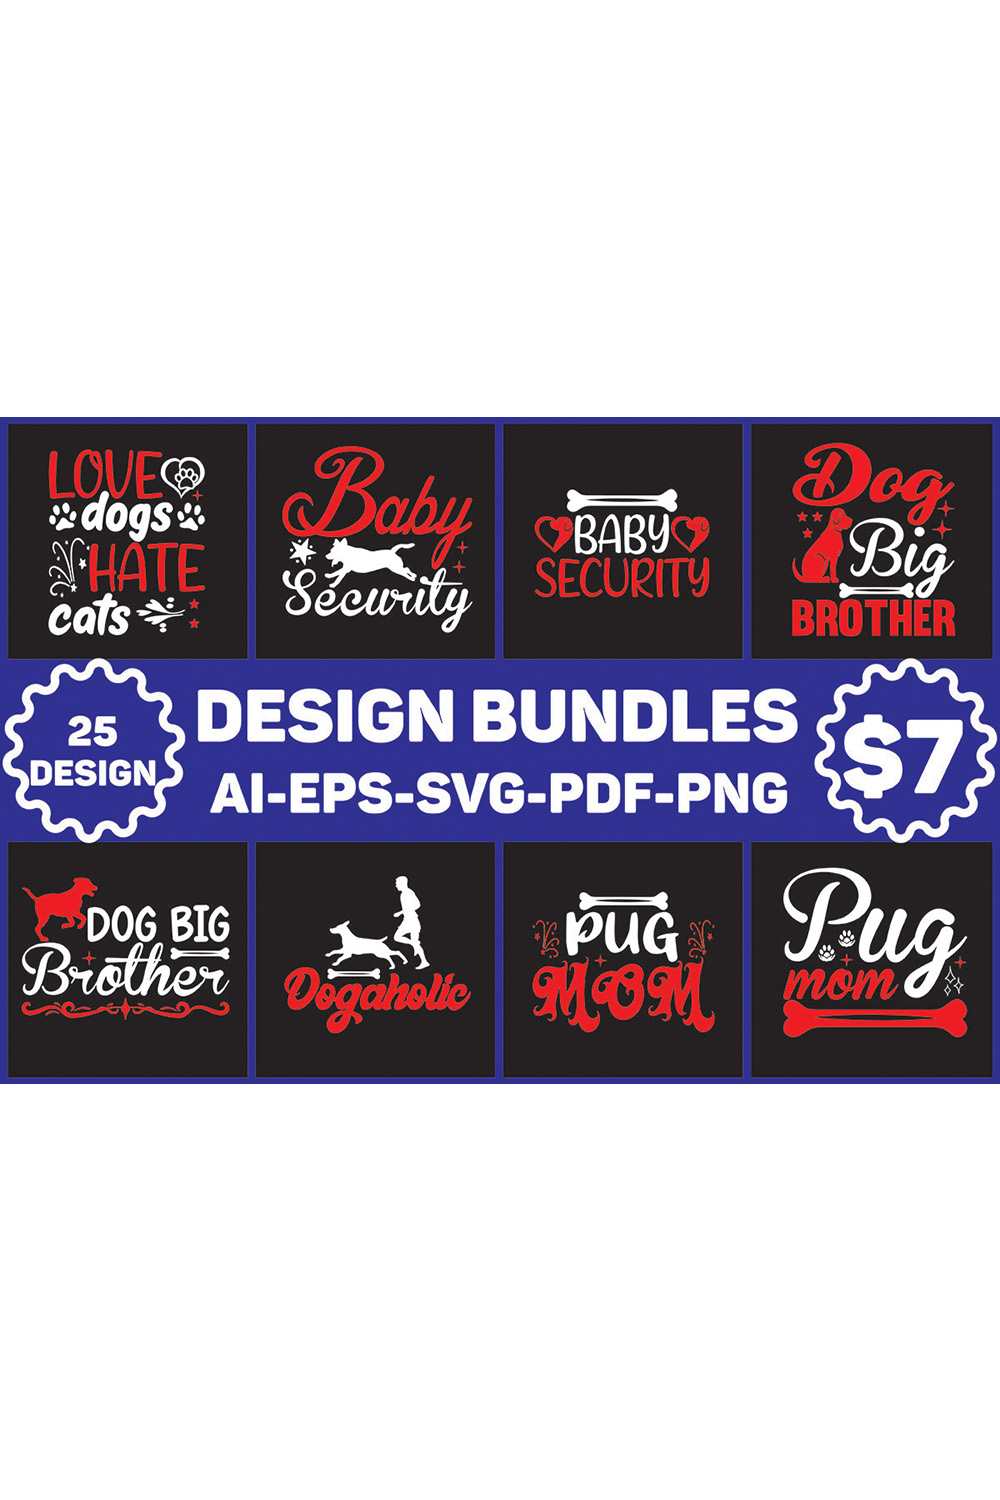 Dog Designs Bundle pinterest preview image.